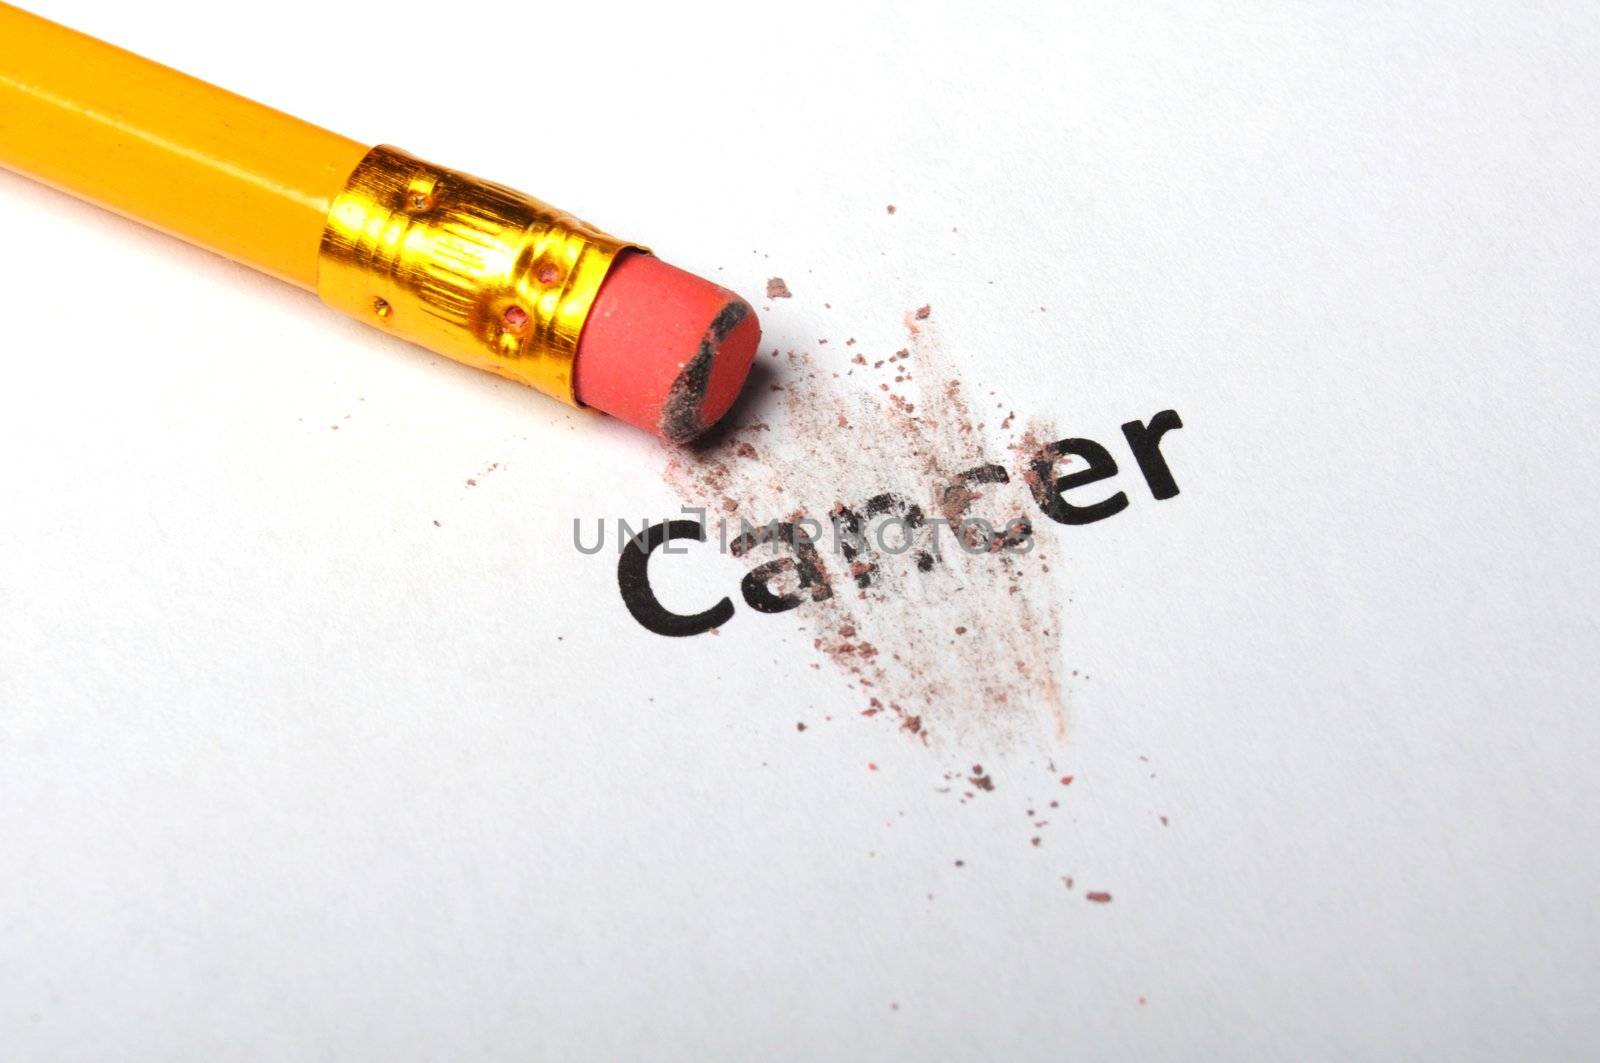 cancer and eraser showing health or medical concept